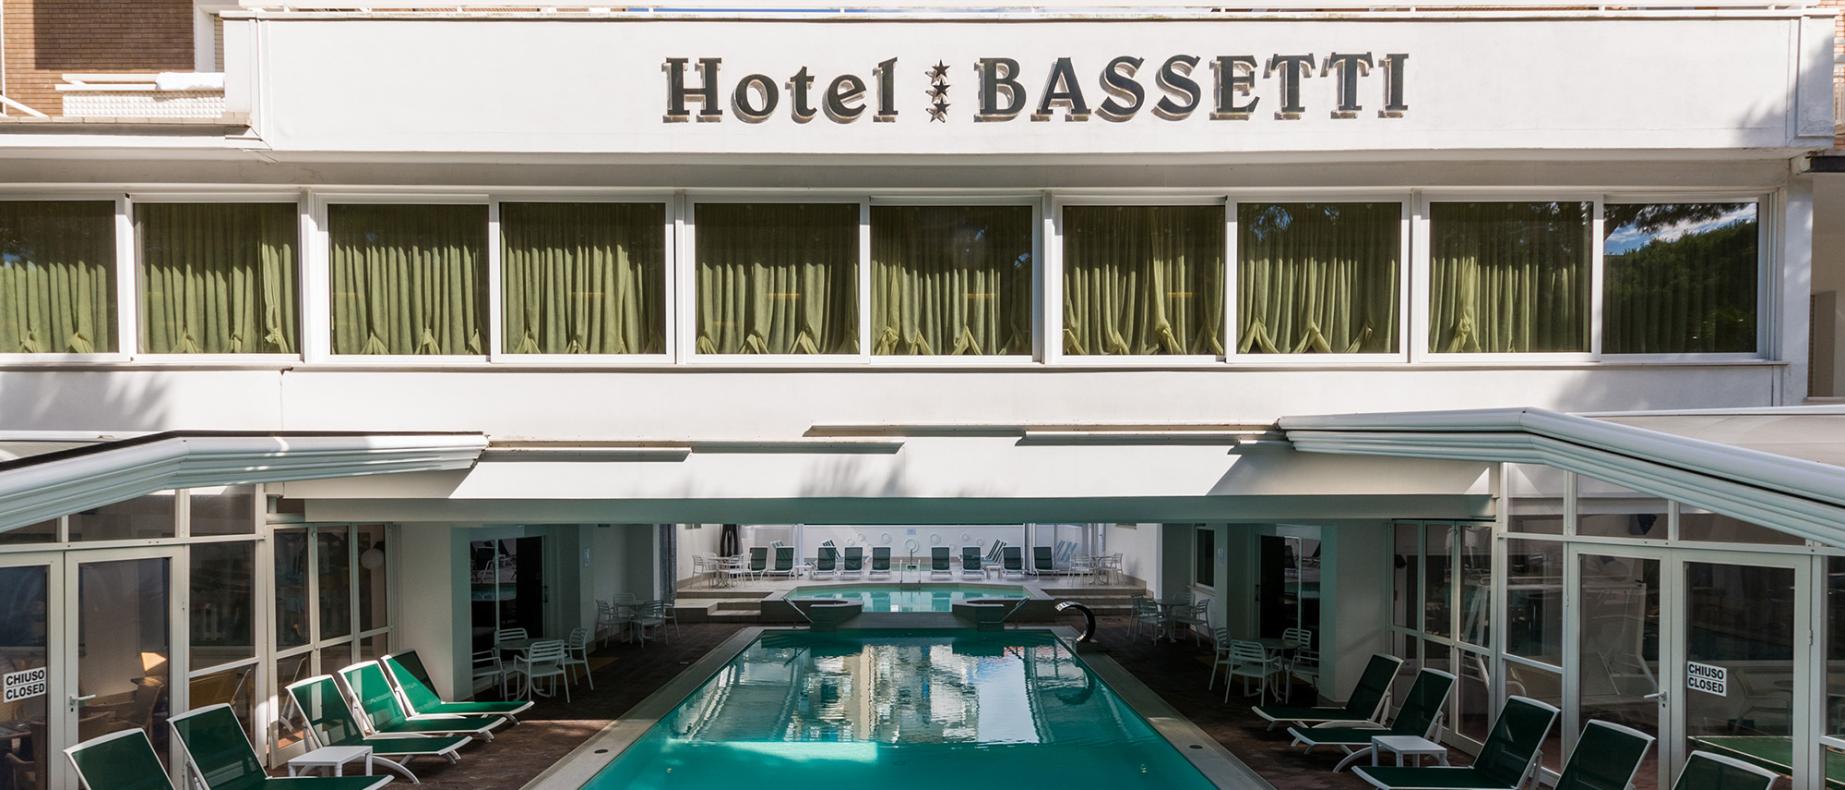 hotelbassetti it 1-it-59217-weekend-premio-ponti-primavera 003